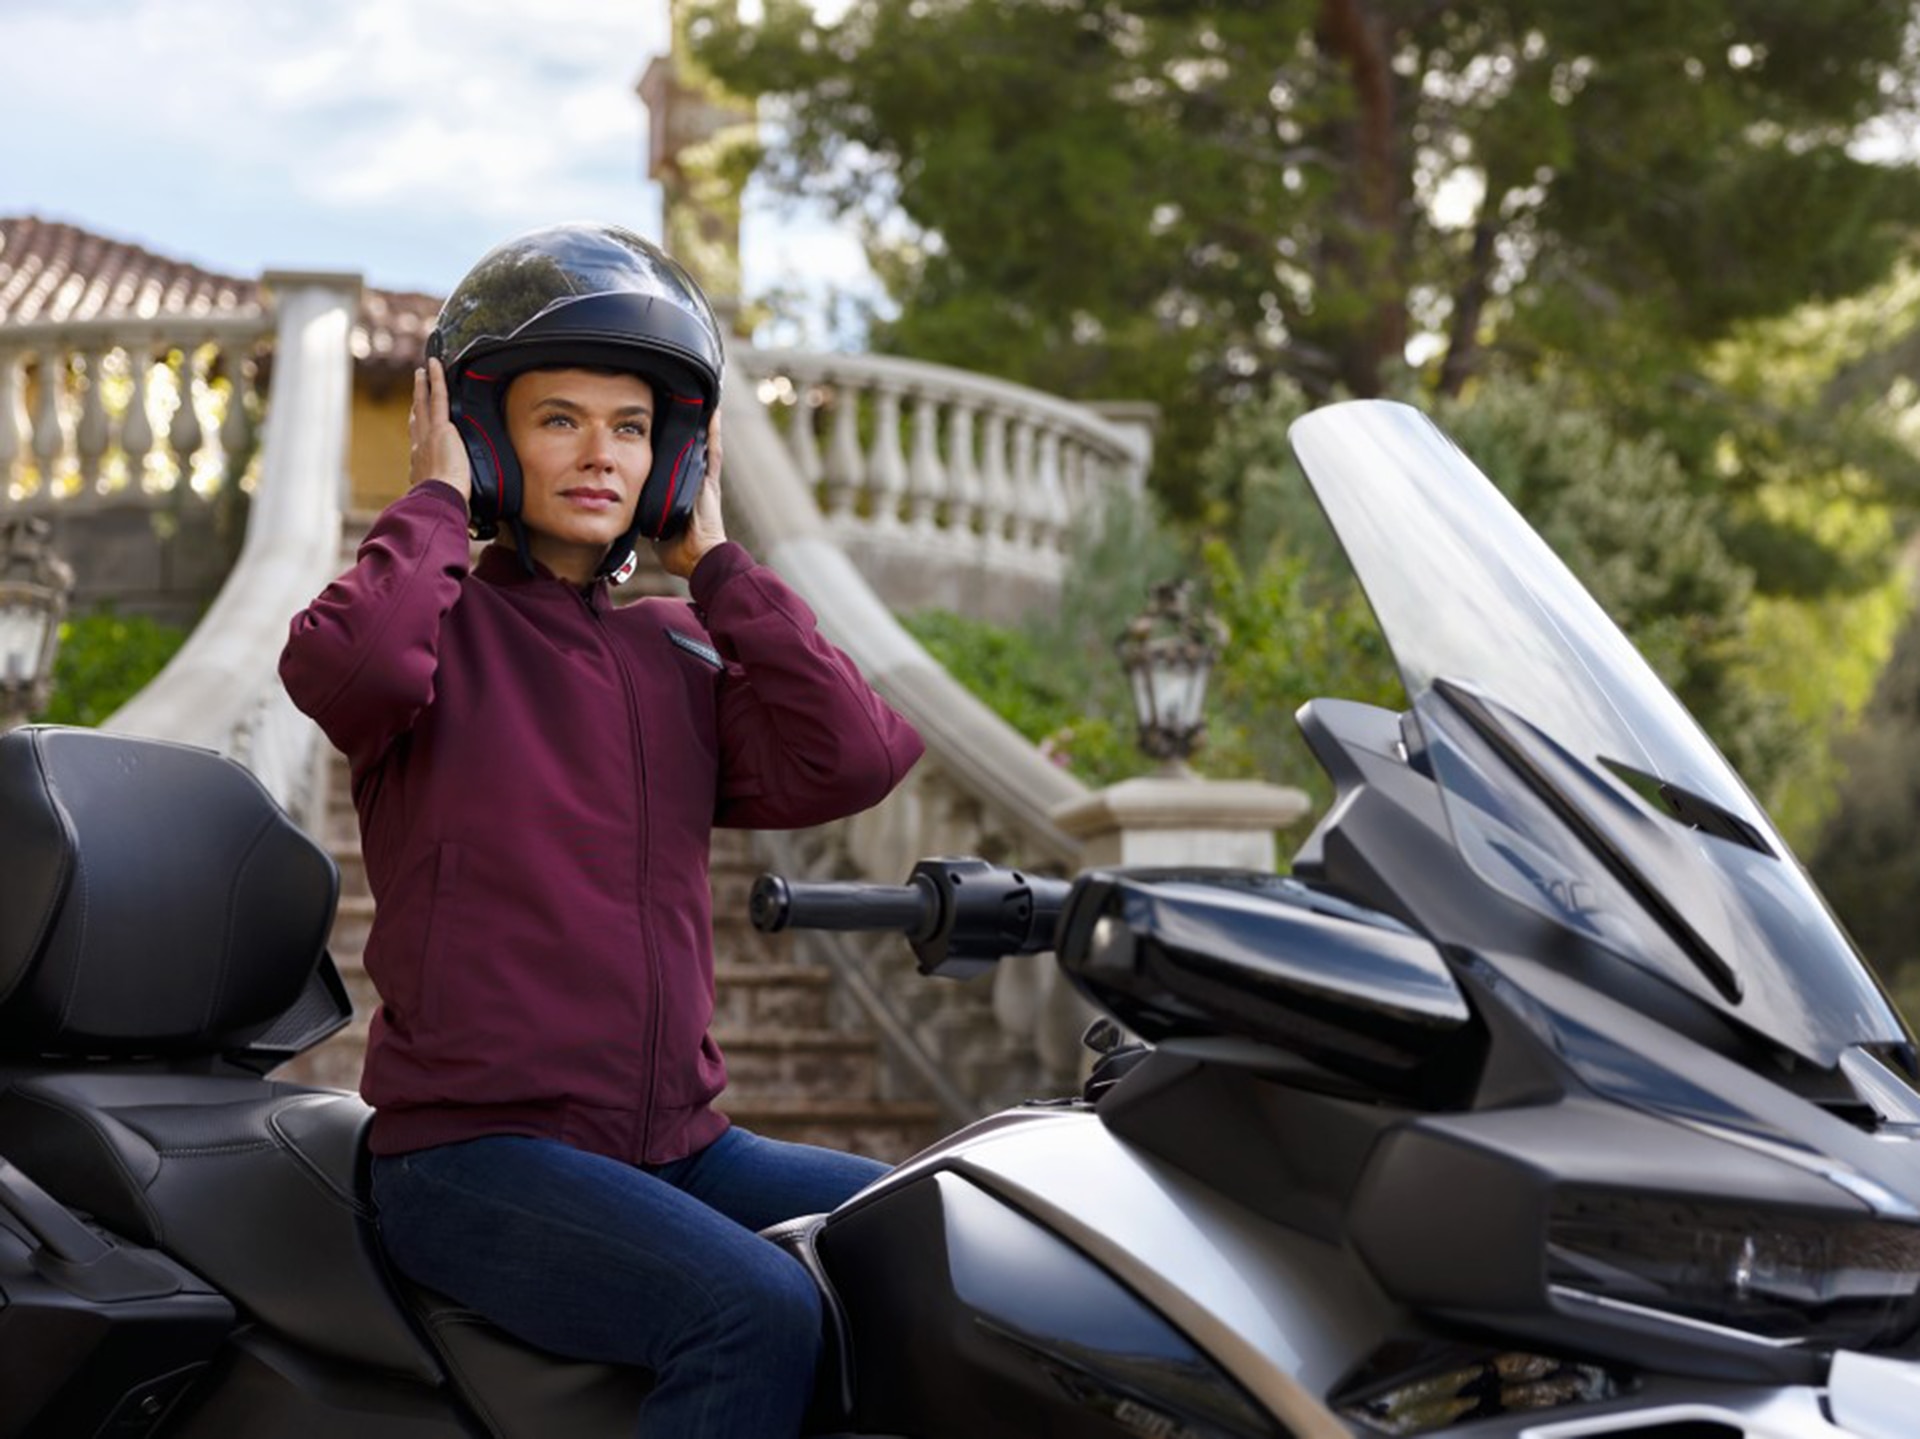 Woman wearing a Can-Am 3-wheel motorcycle helmet